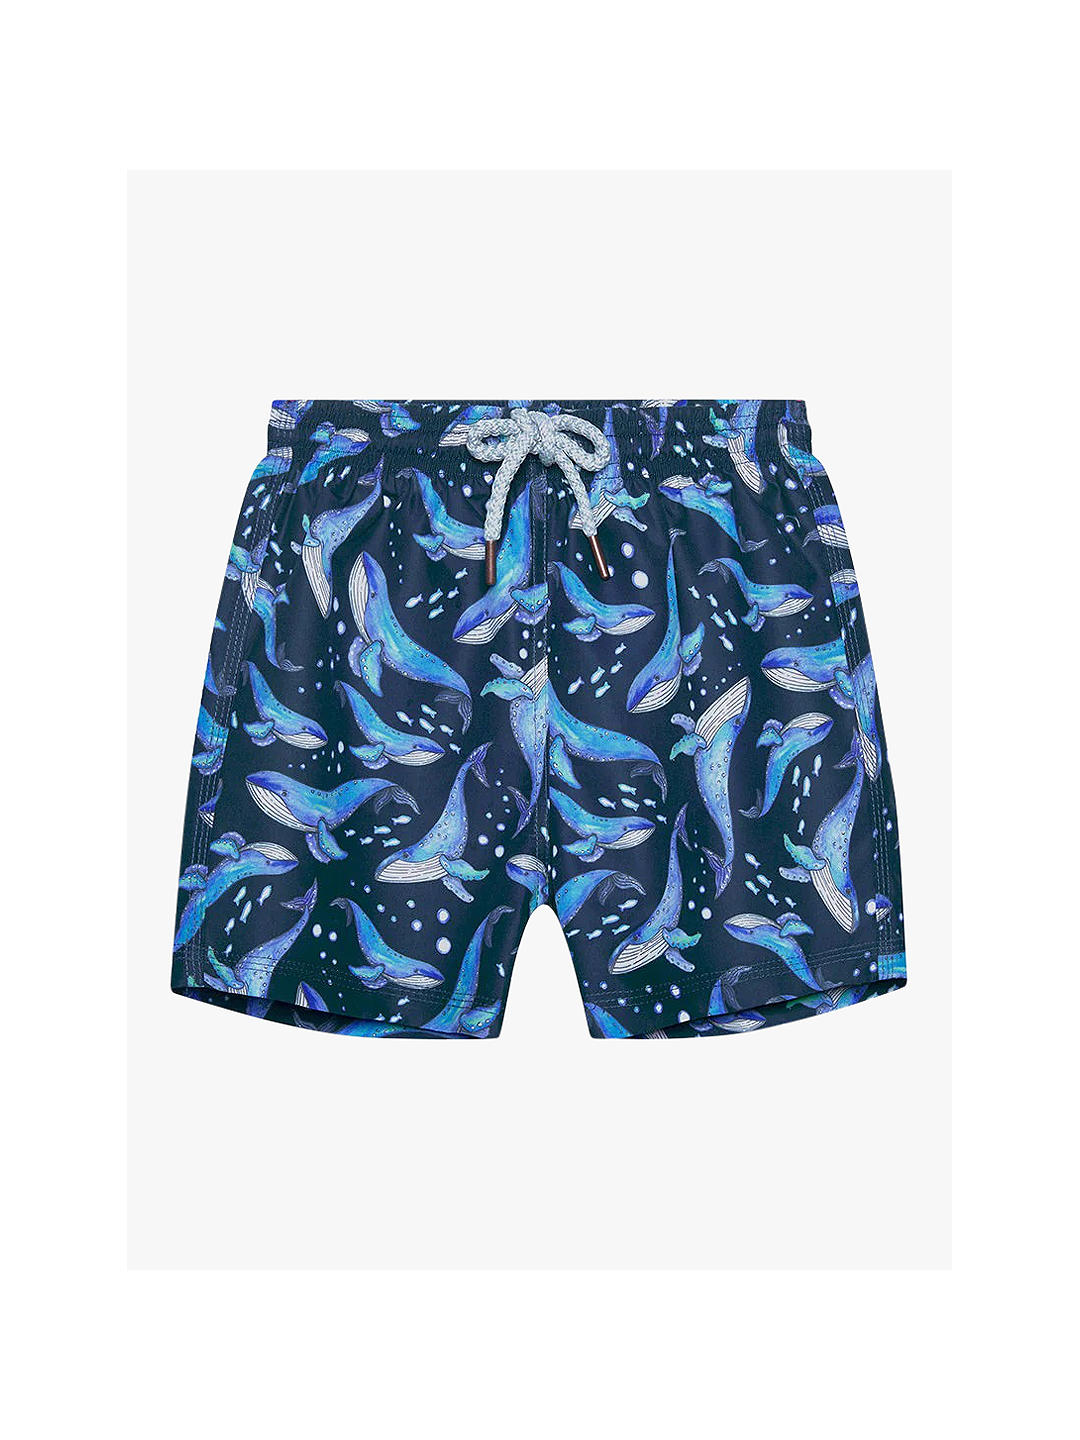 Trotters Kids' Whale Print Swim Shorts, Navy